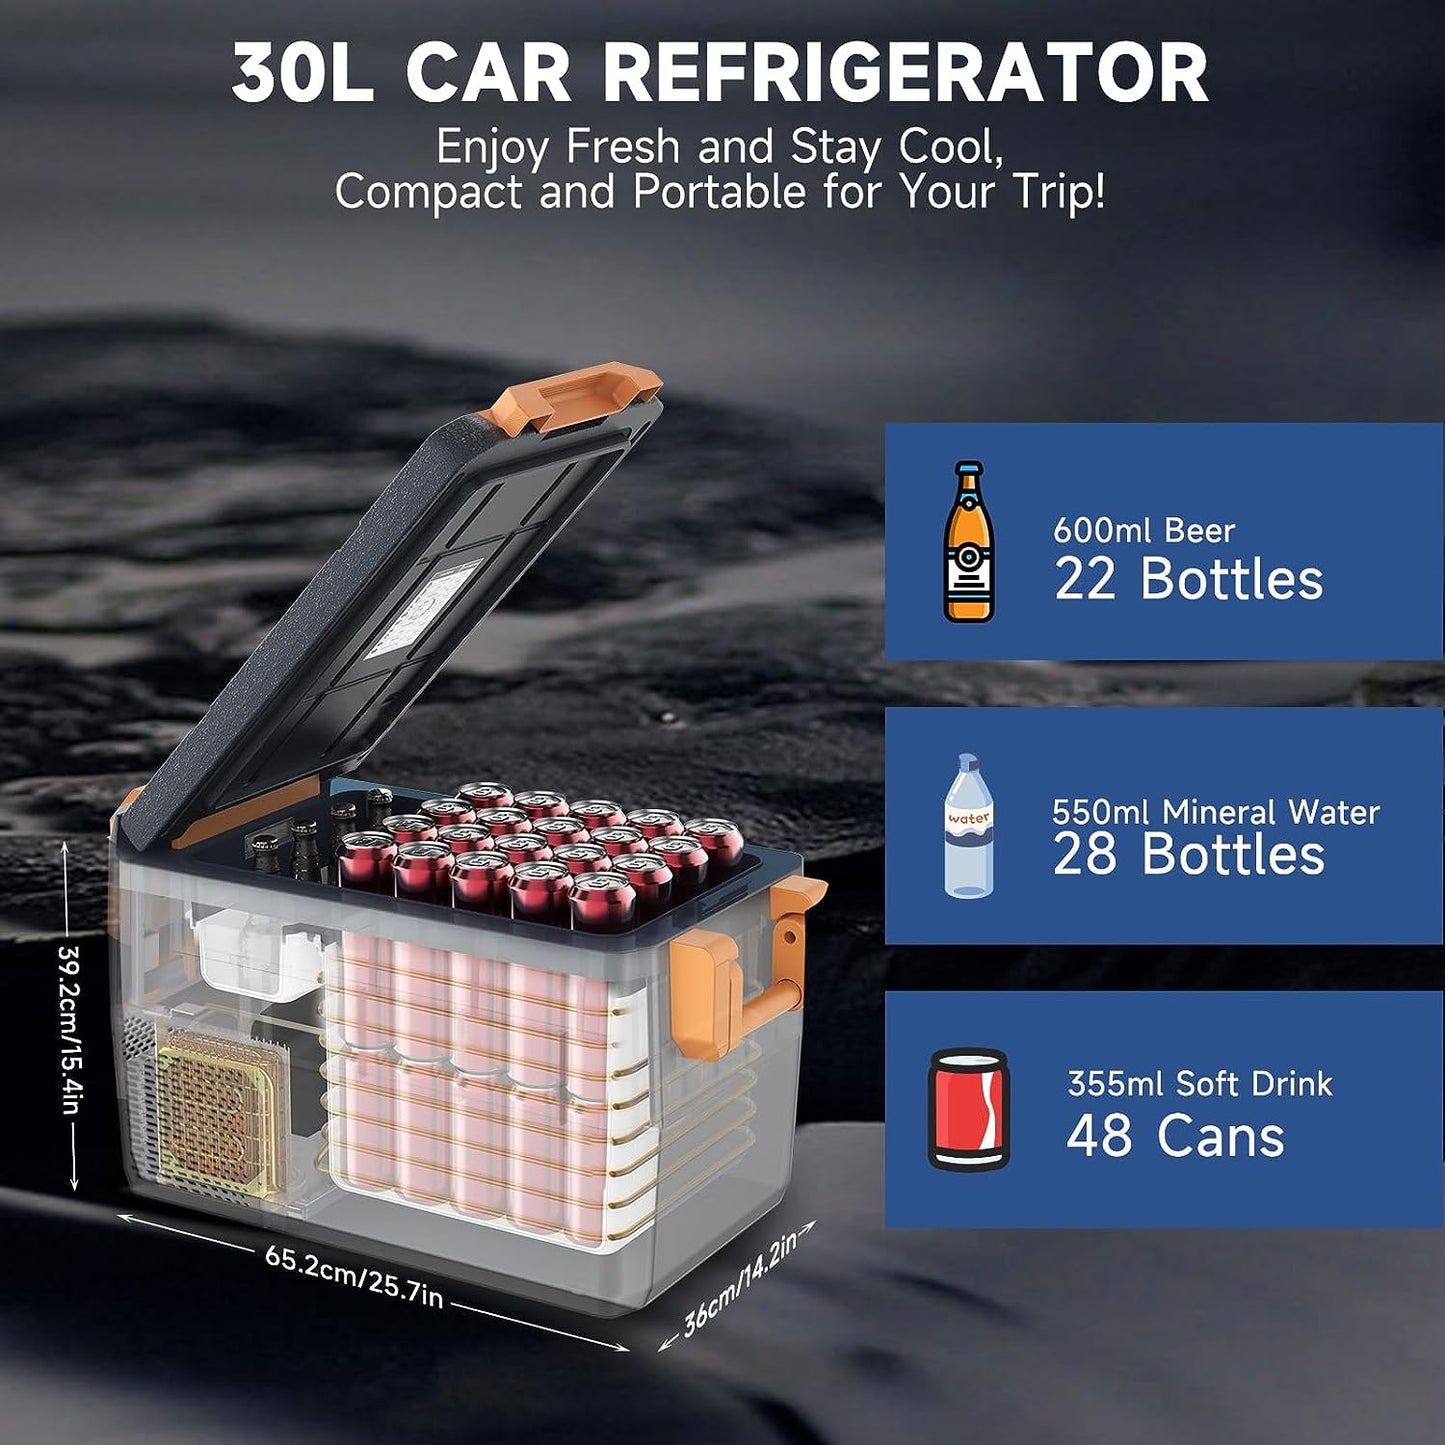 12 Volt Refrigerator for Car: 20L Portable Fridge Car Cooler -4℉-68℉ RV Electric Compressor Cooler APP Control Mini Fridge and Freezer, 12/24V DC and 100-240V AC for Travel, Camping